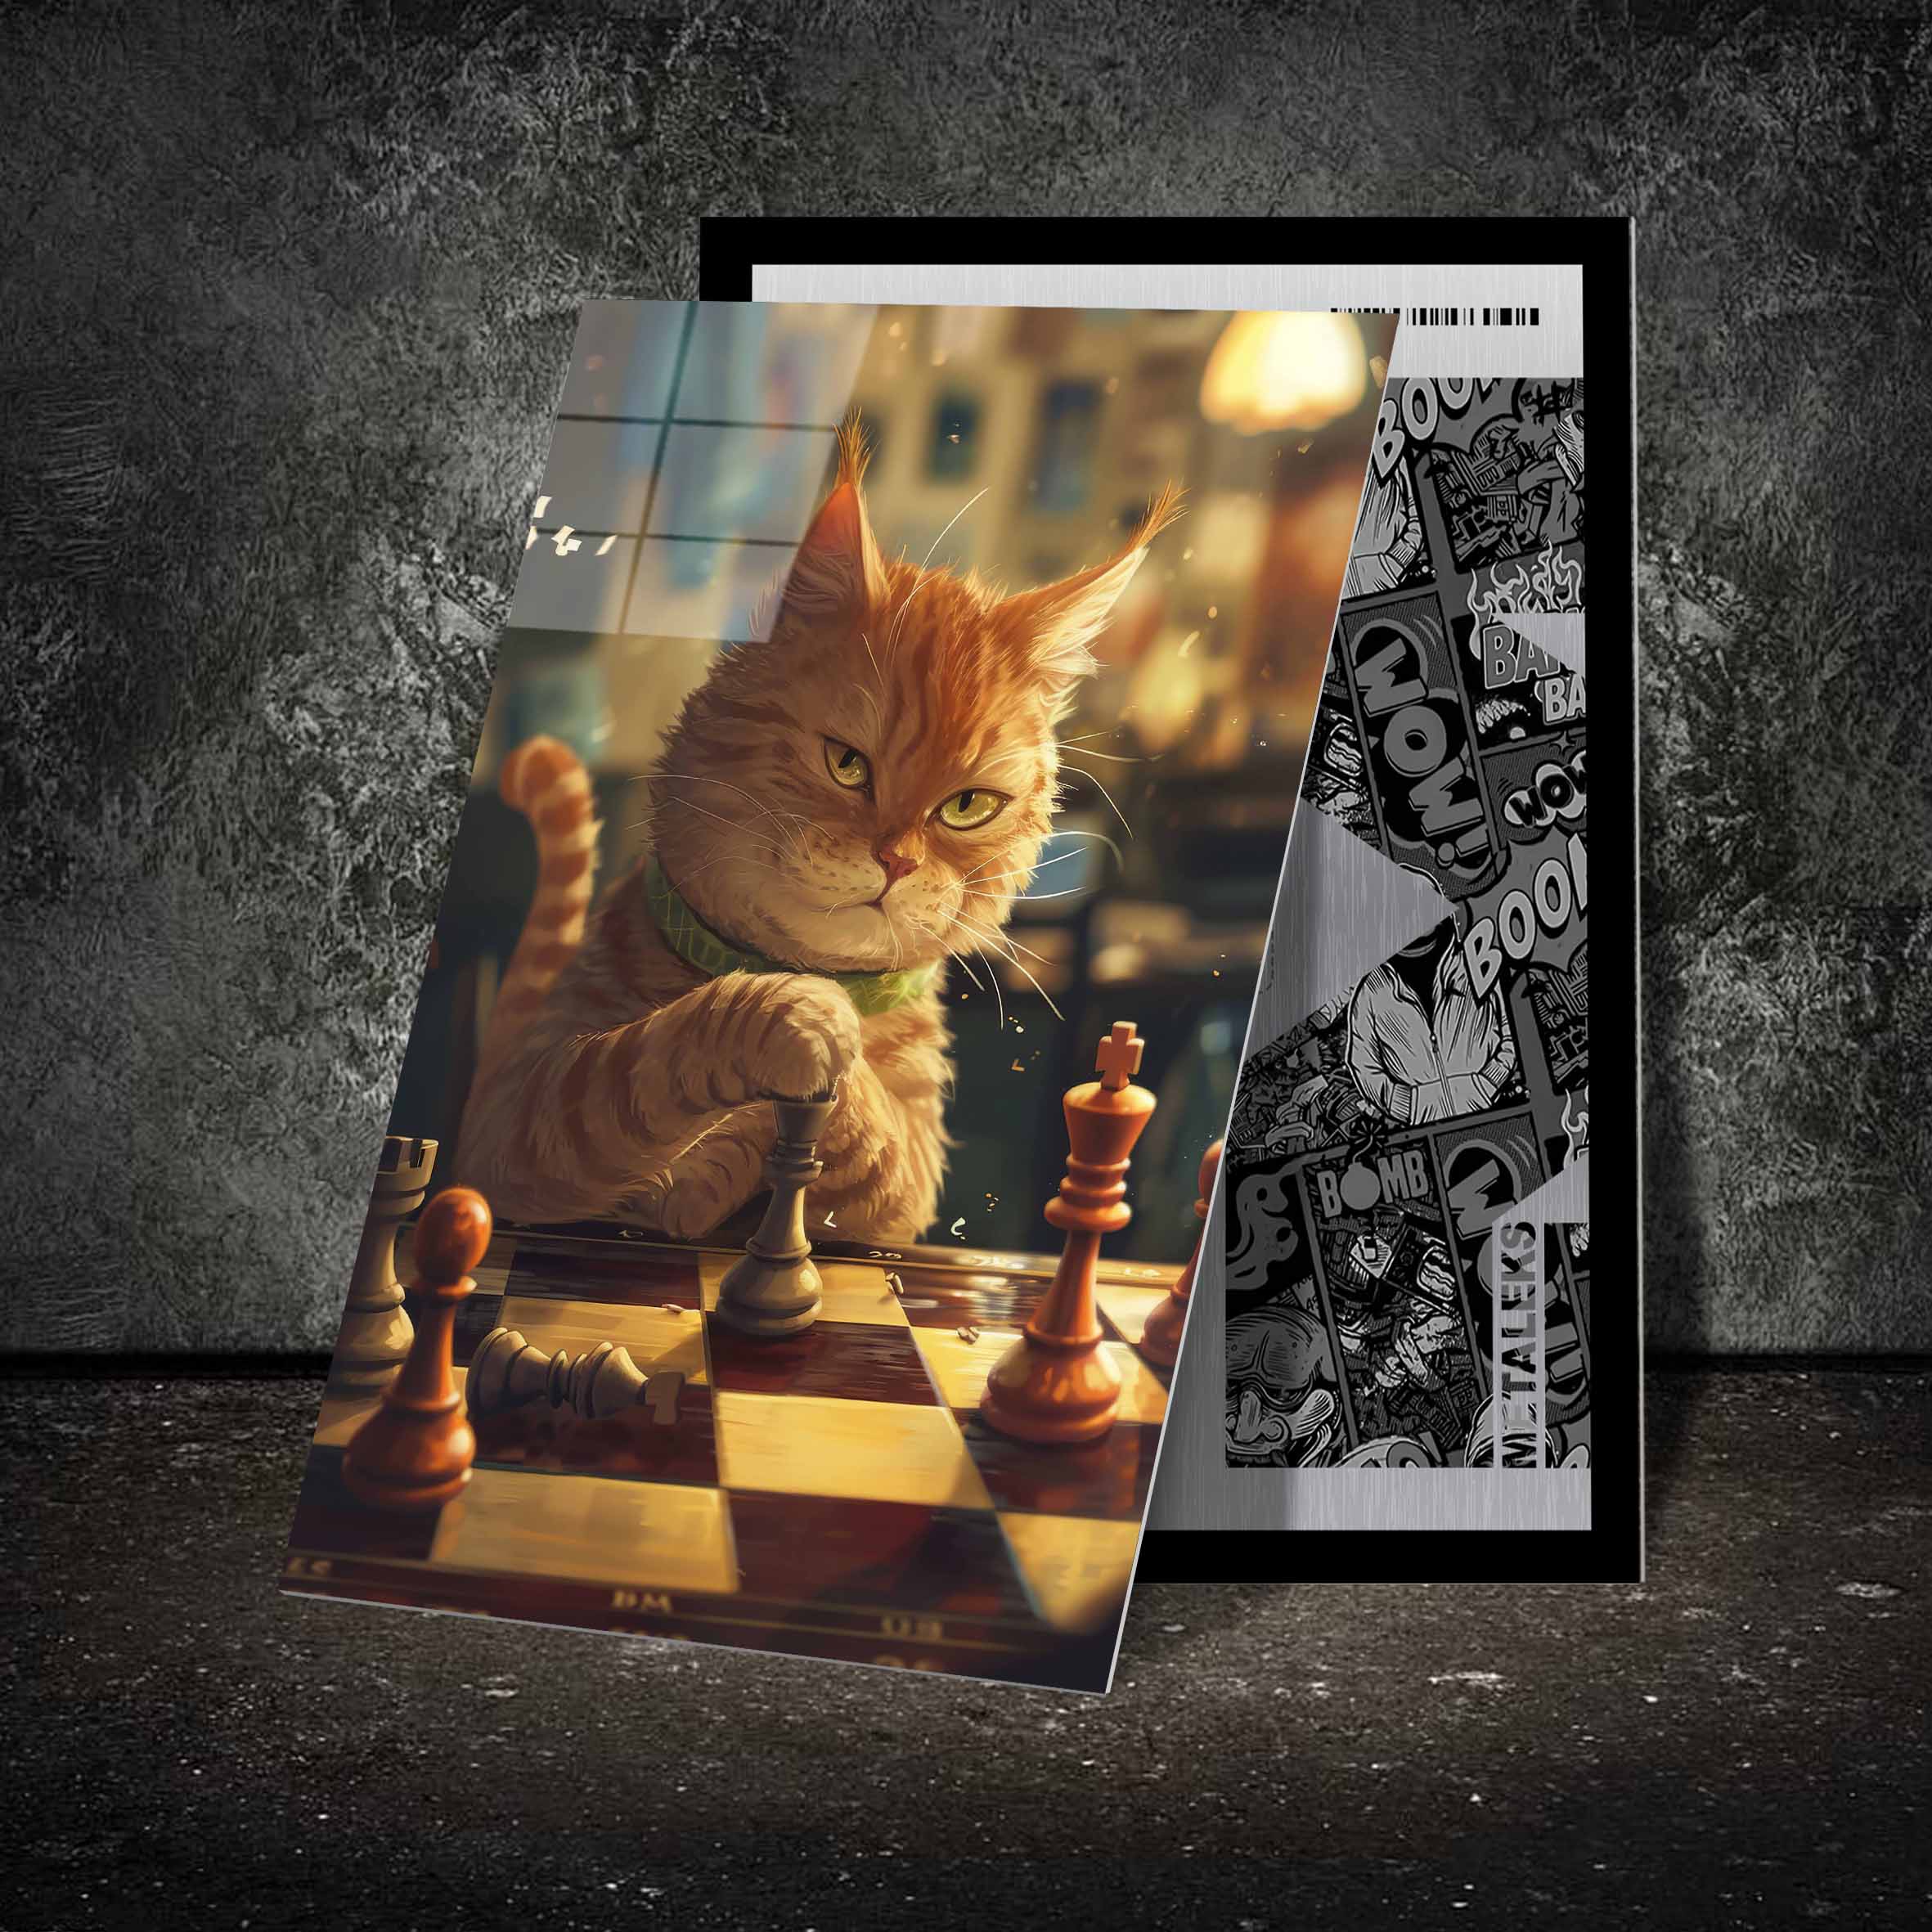 Chess Cat-designed by @Moqotib